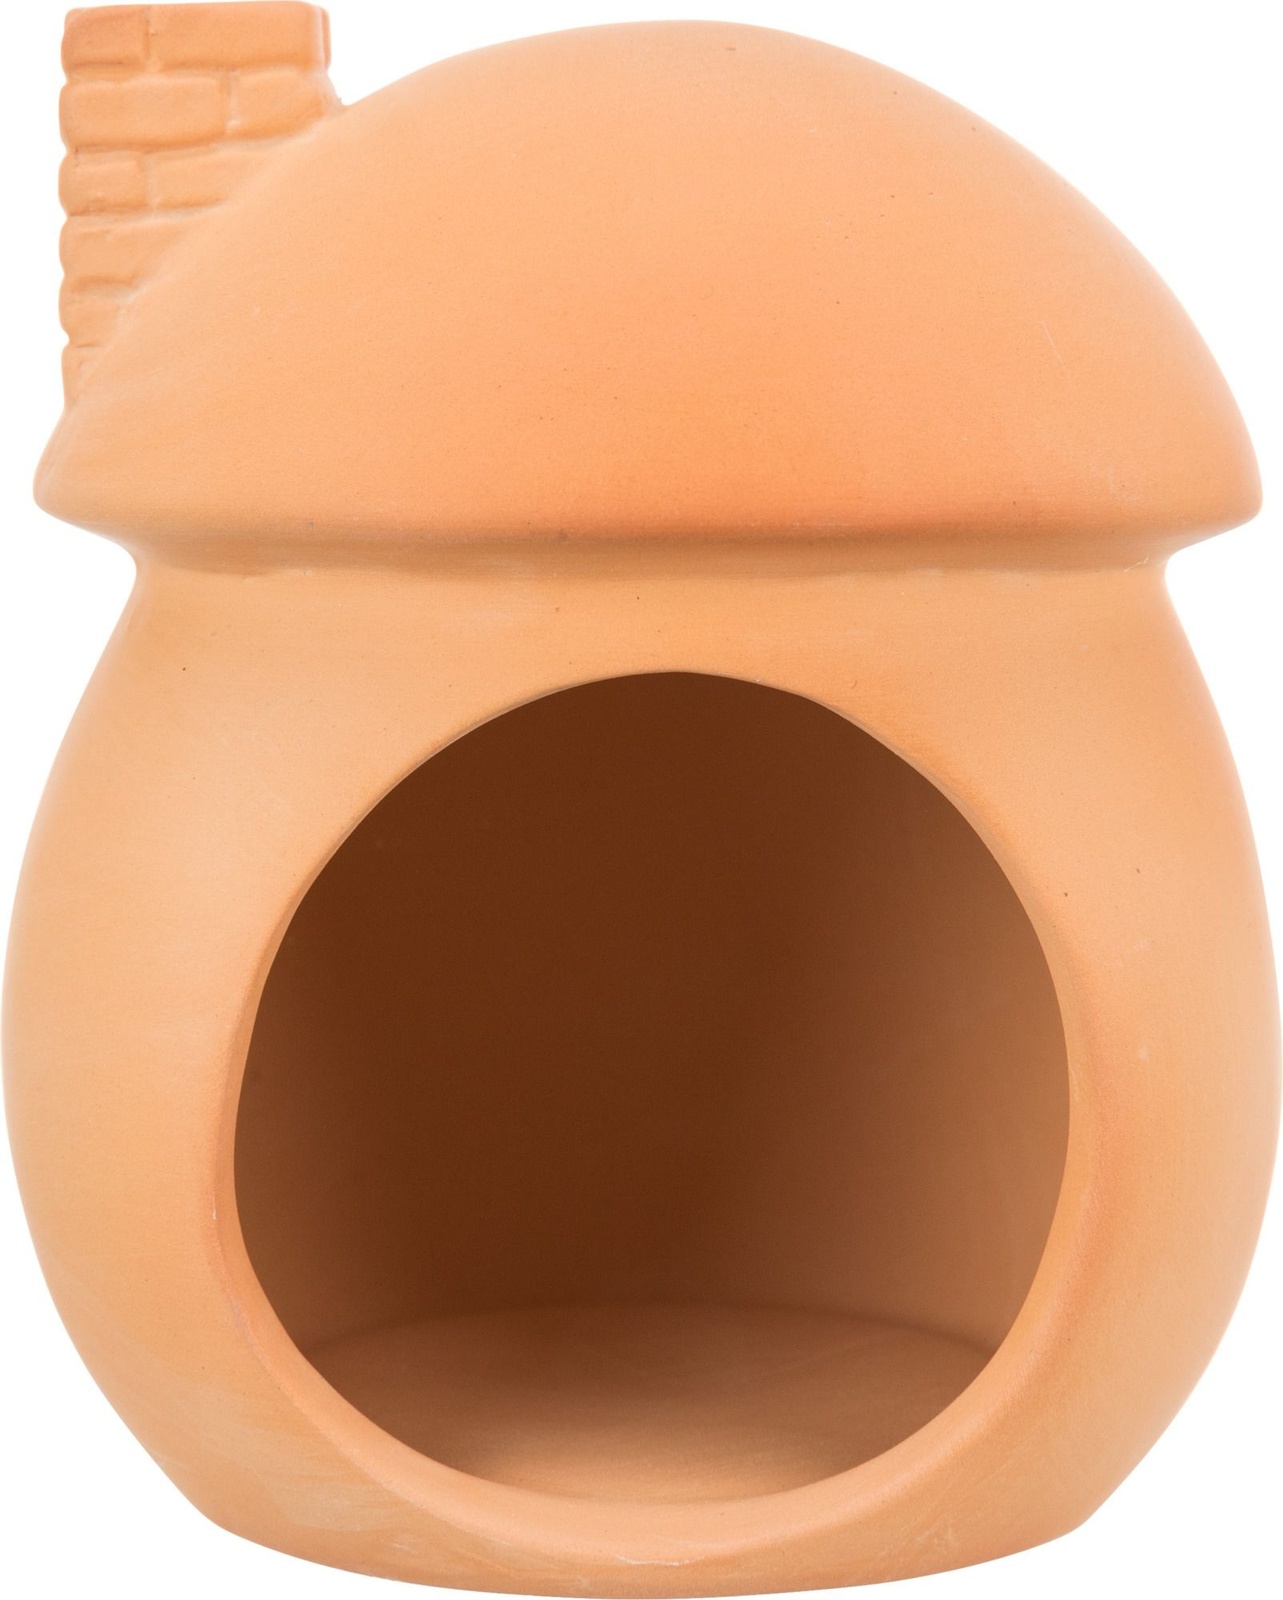 Trixie Trixie домик для мышей, керамика, терракотовый (246 г) trixie trixie домик для мышей керамика терракотовый 246 г